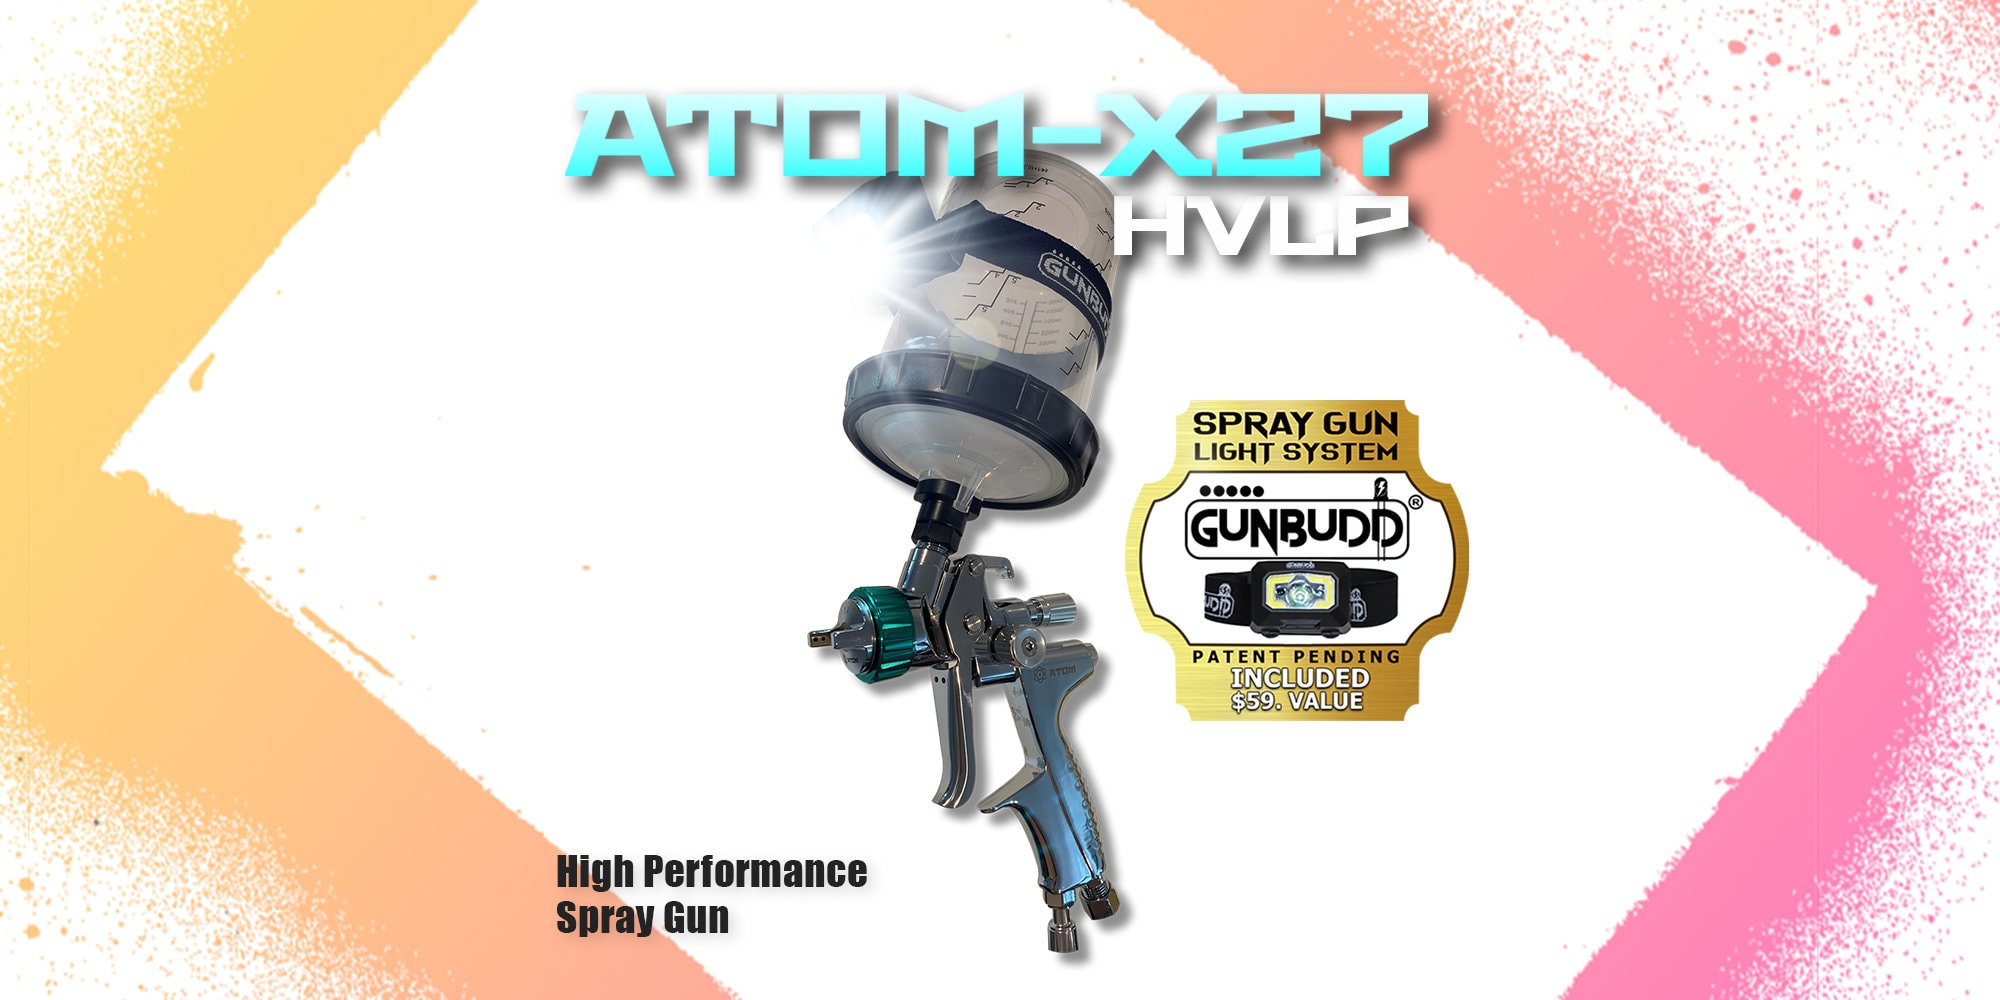 ATOM X21 Professional Spray Gun MP-LVLP Solvent/Waterborne